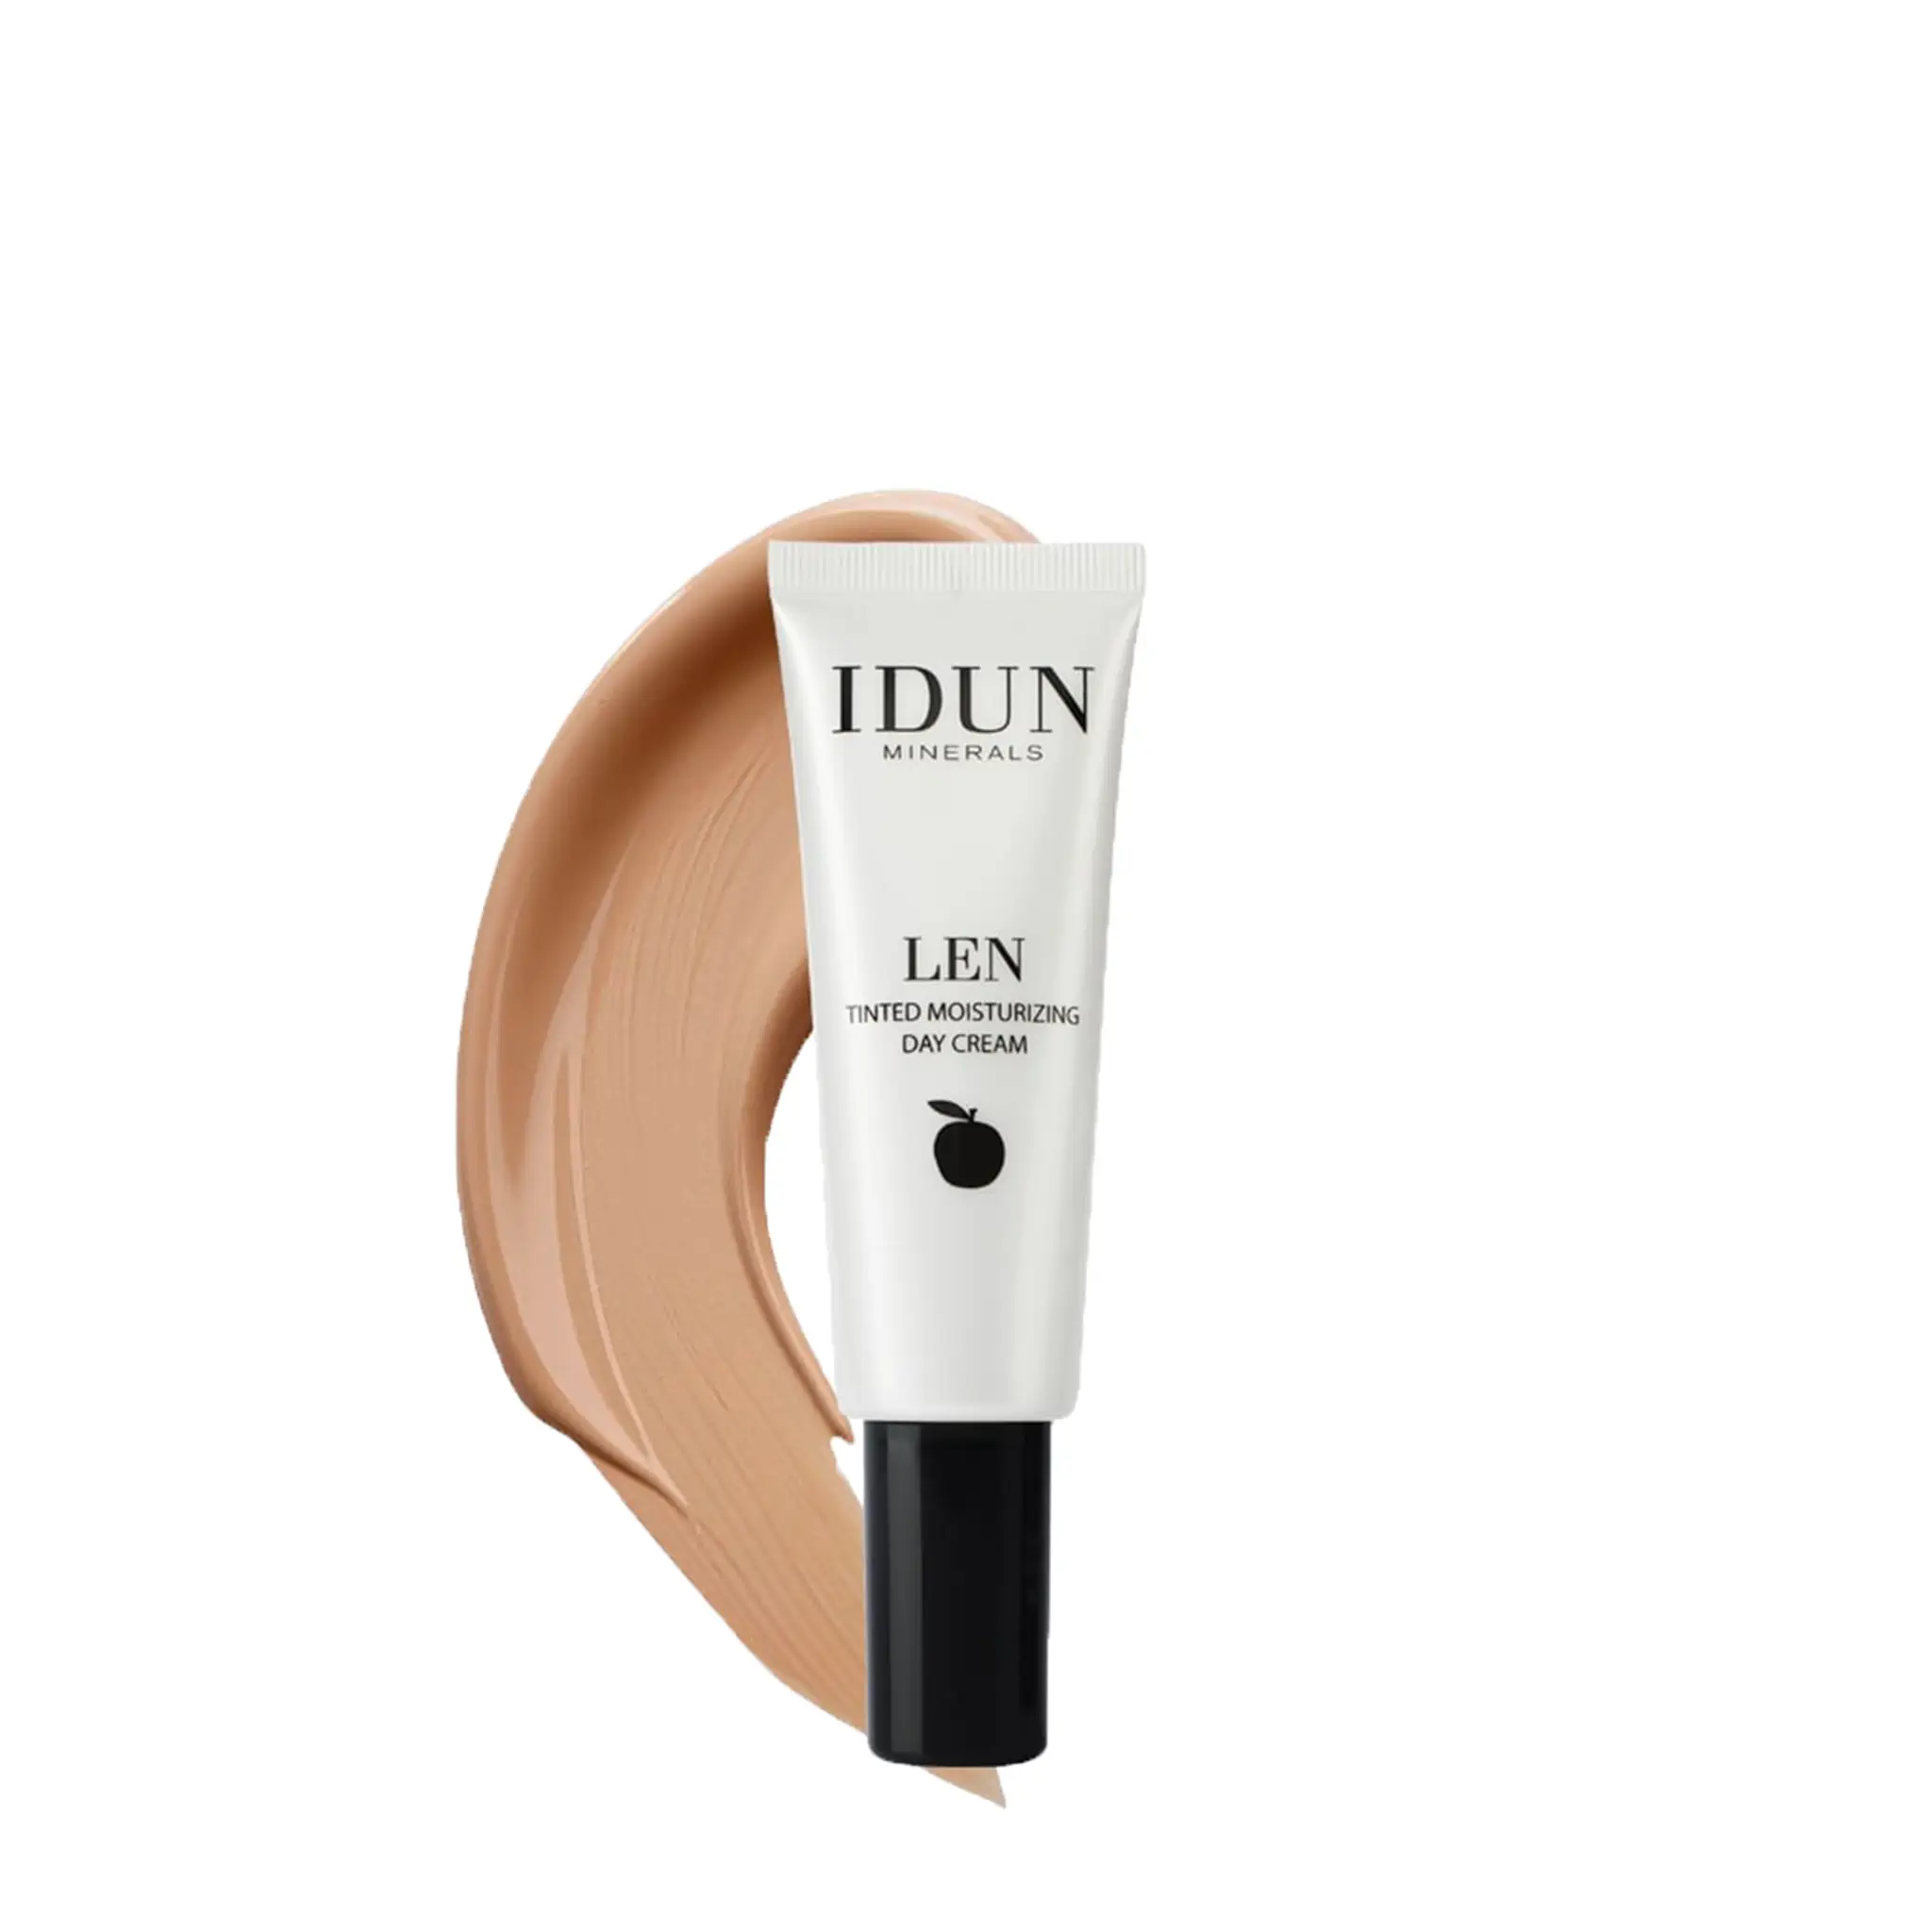 Idun Minerals Tinted Moisturizing Day Cream Len Tan